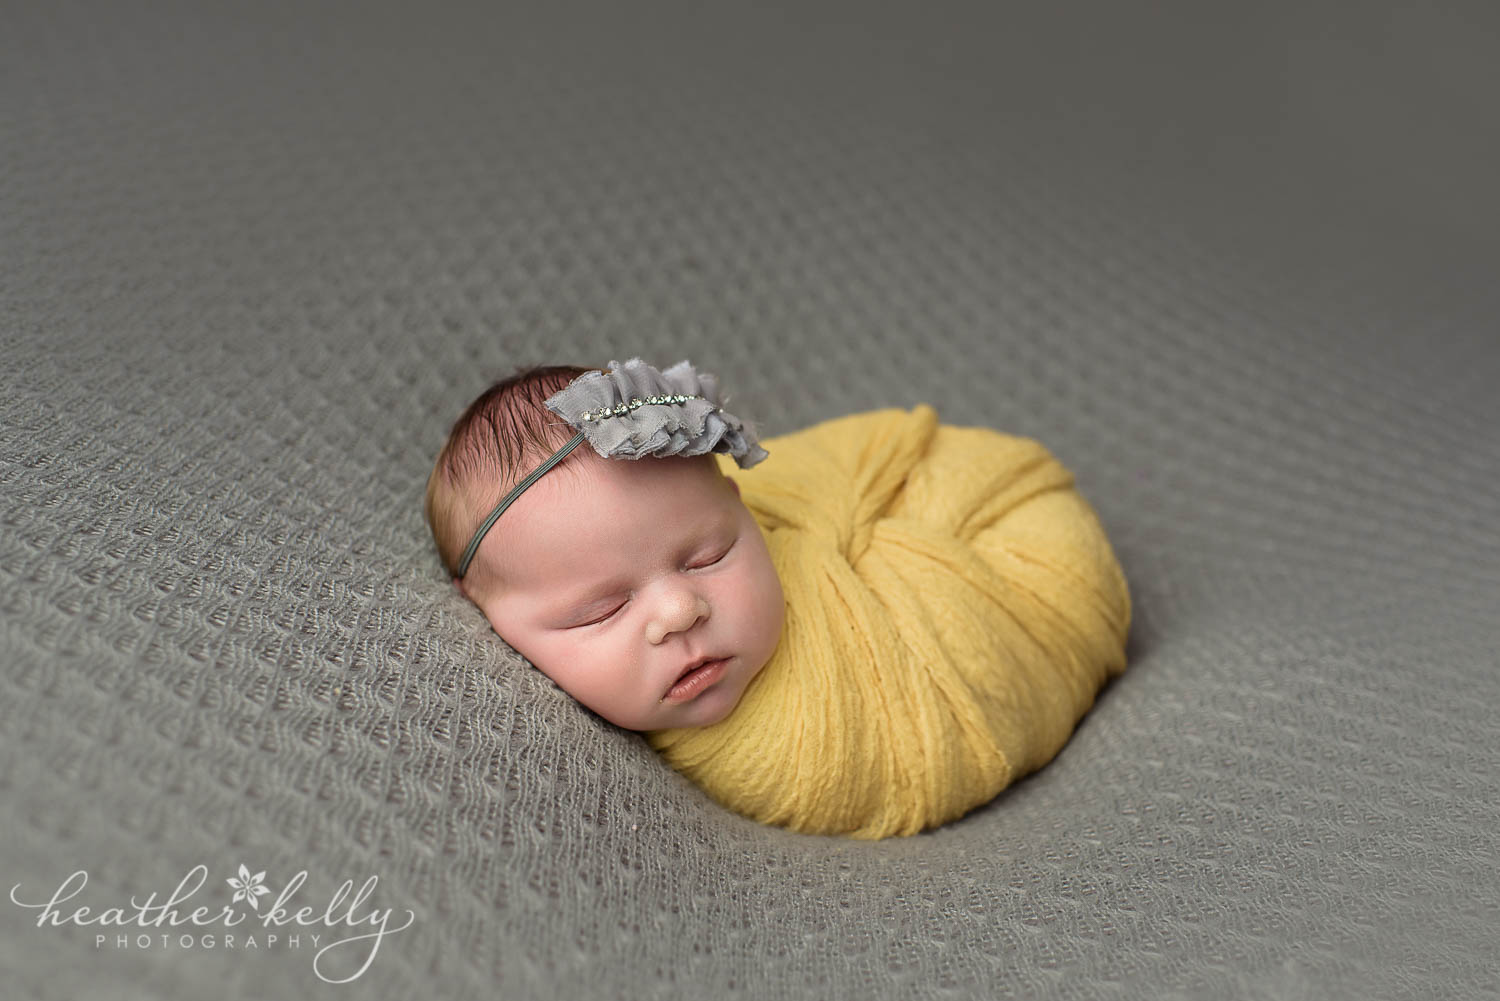 twist wrap newborn girl yellow and gray. newborn wrapping poses